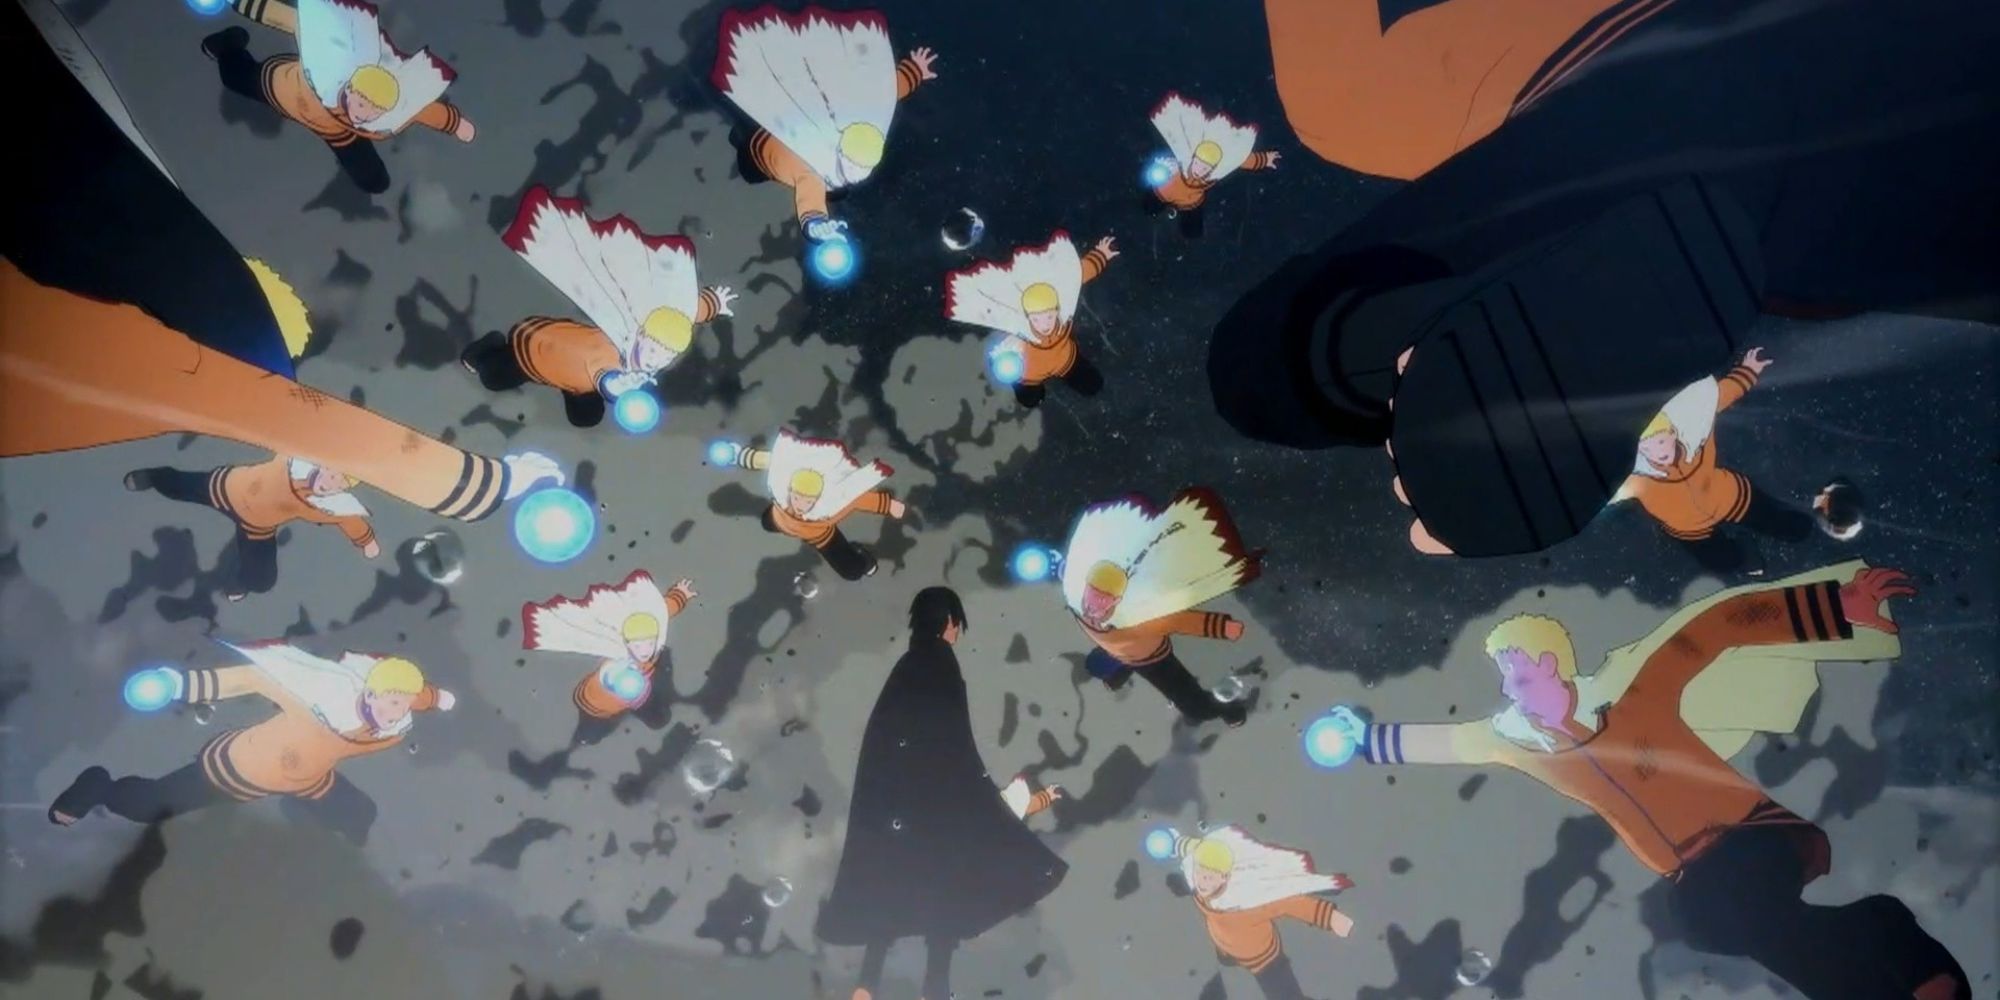 See Naruto & Sasuke in Naruto x Boruto Ultimate Ninja Storm Connections